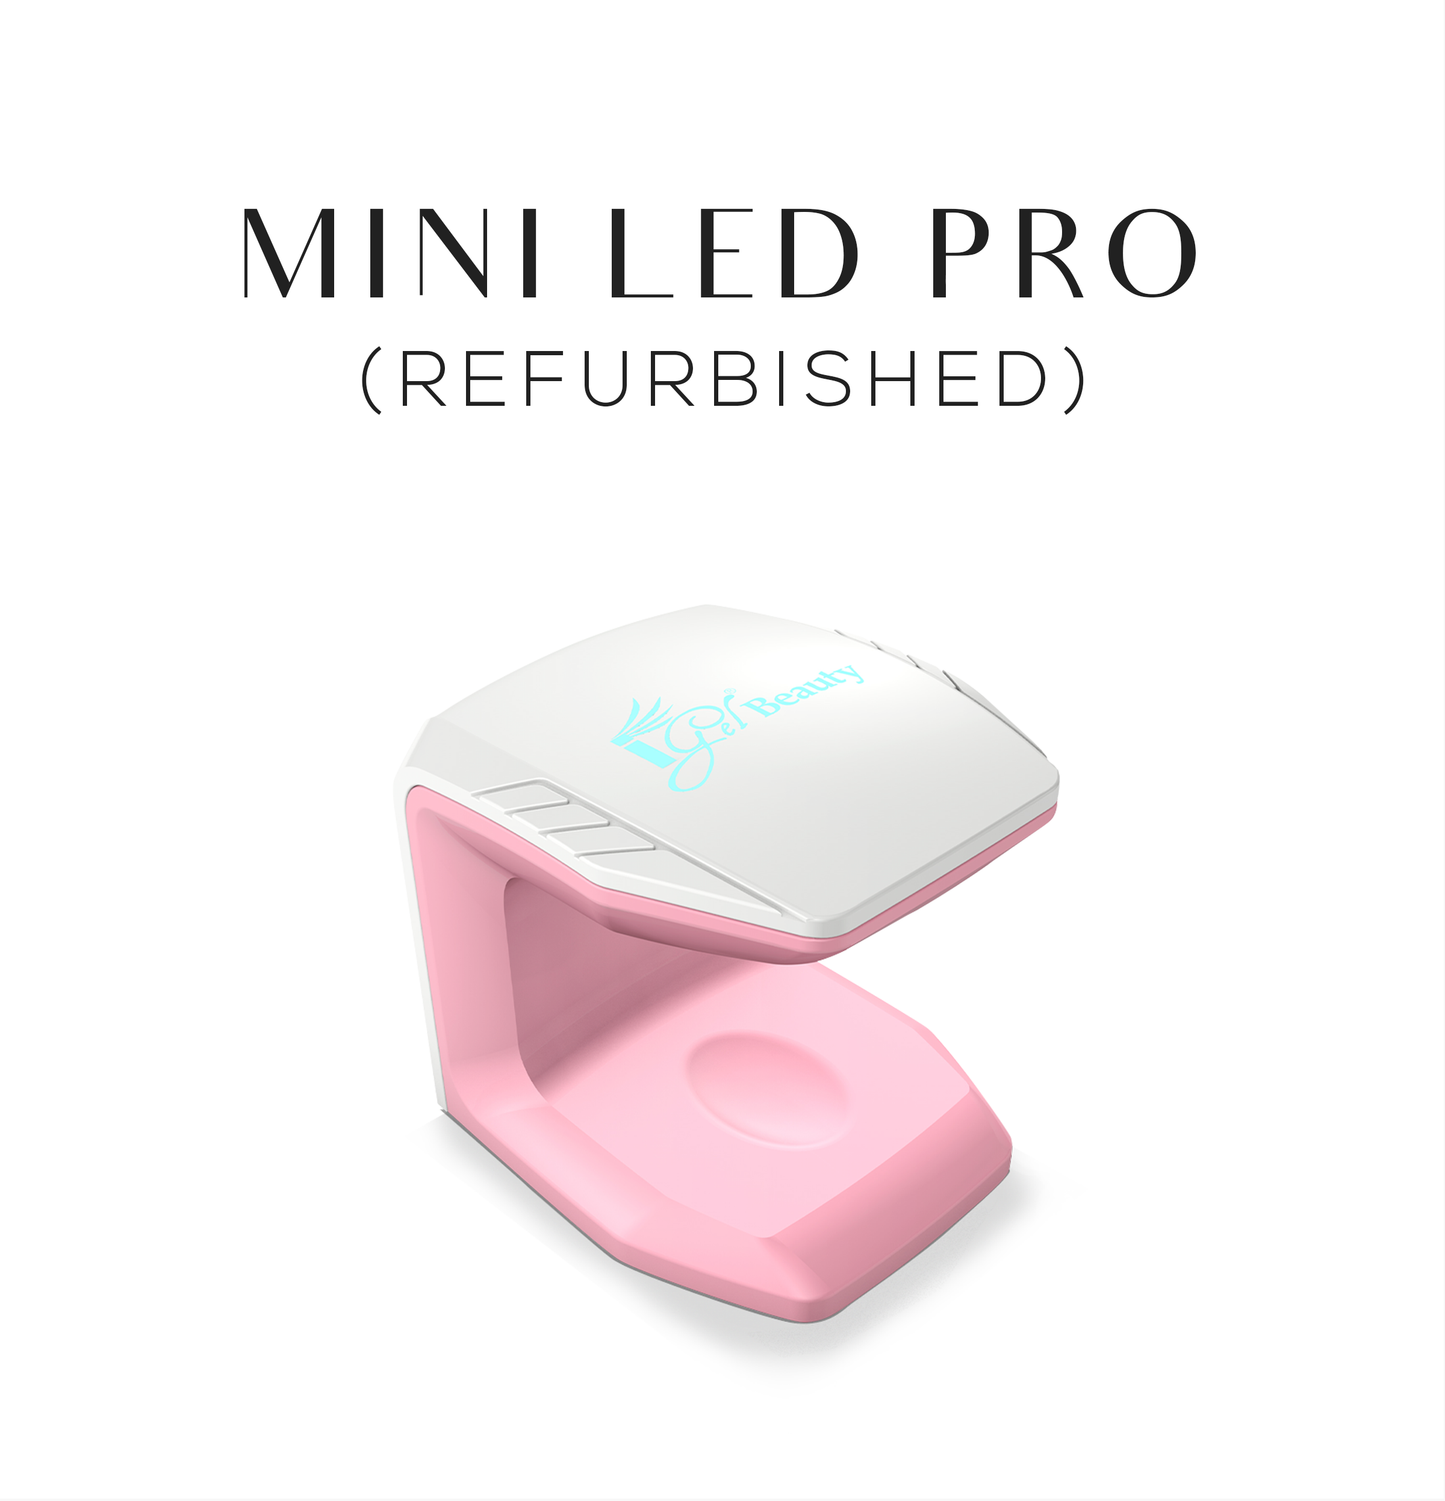 REFURBISHED - Mini LED Pro